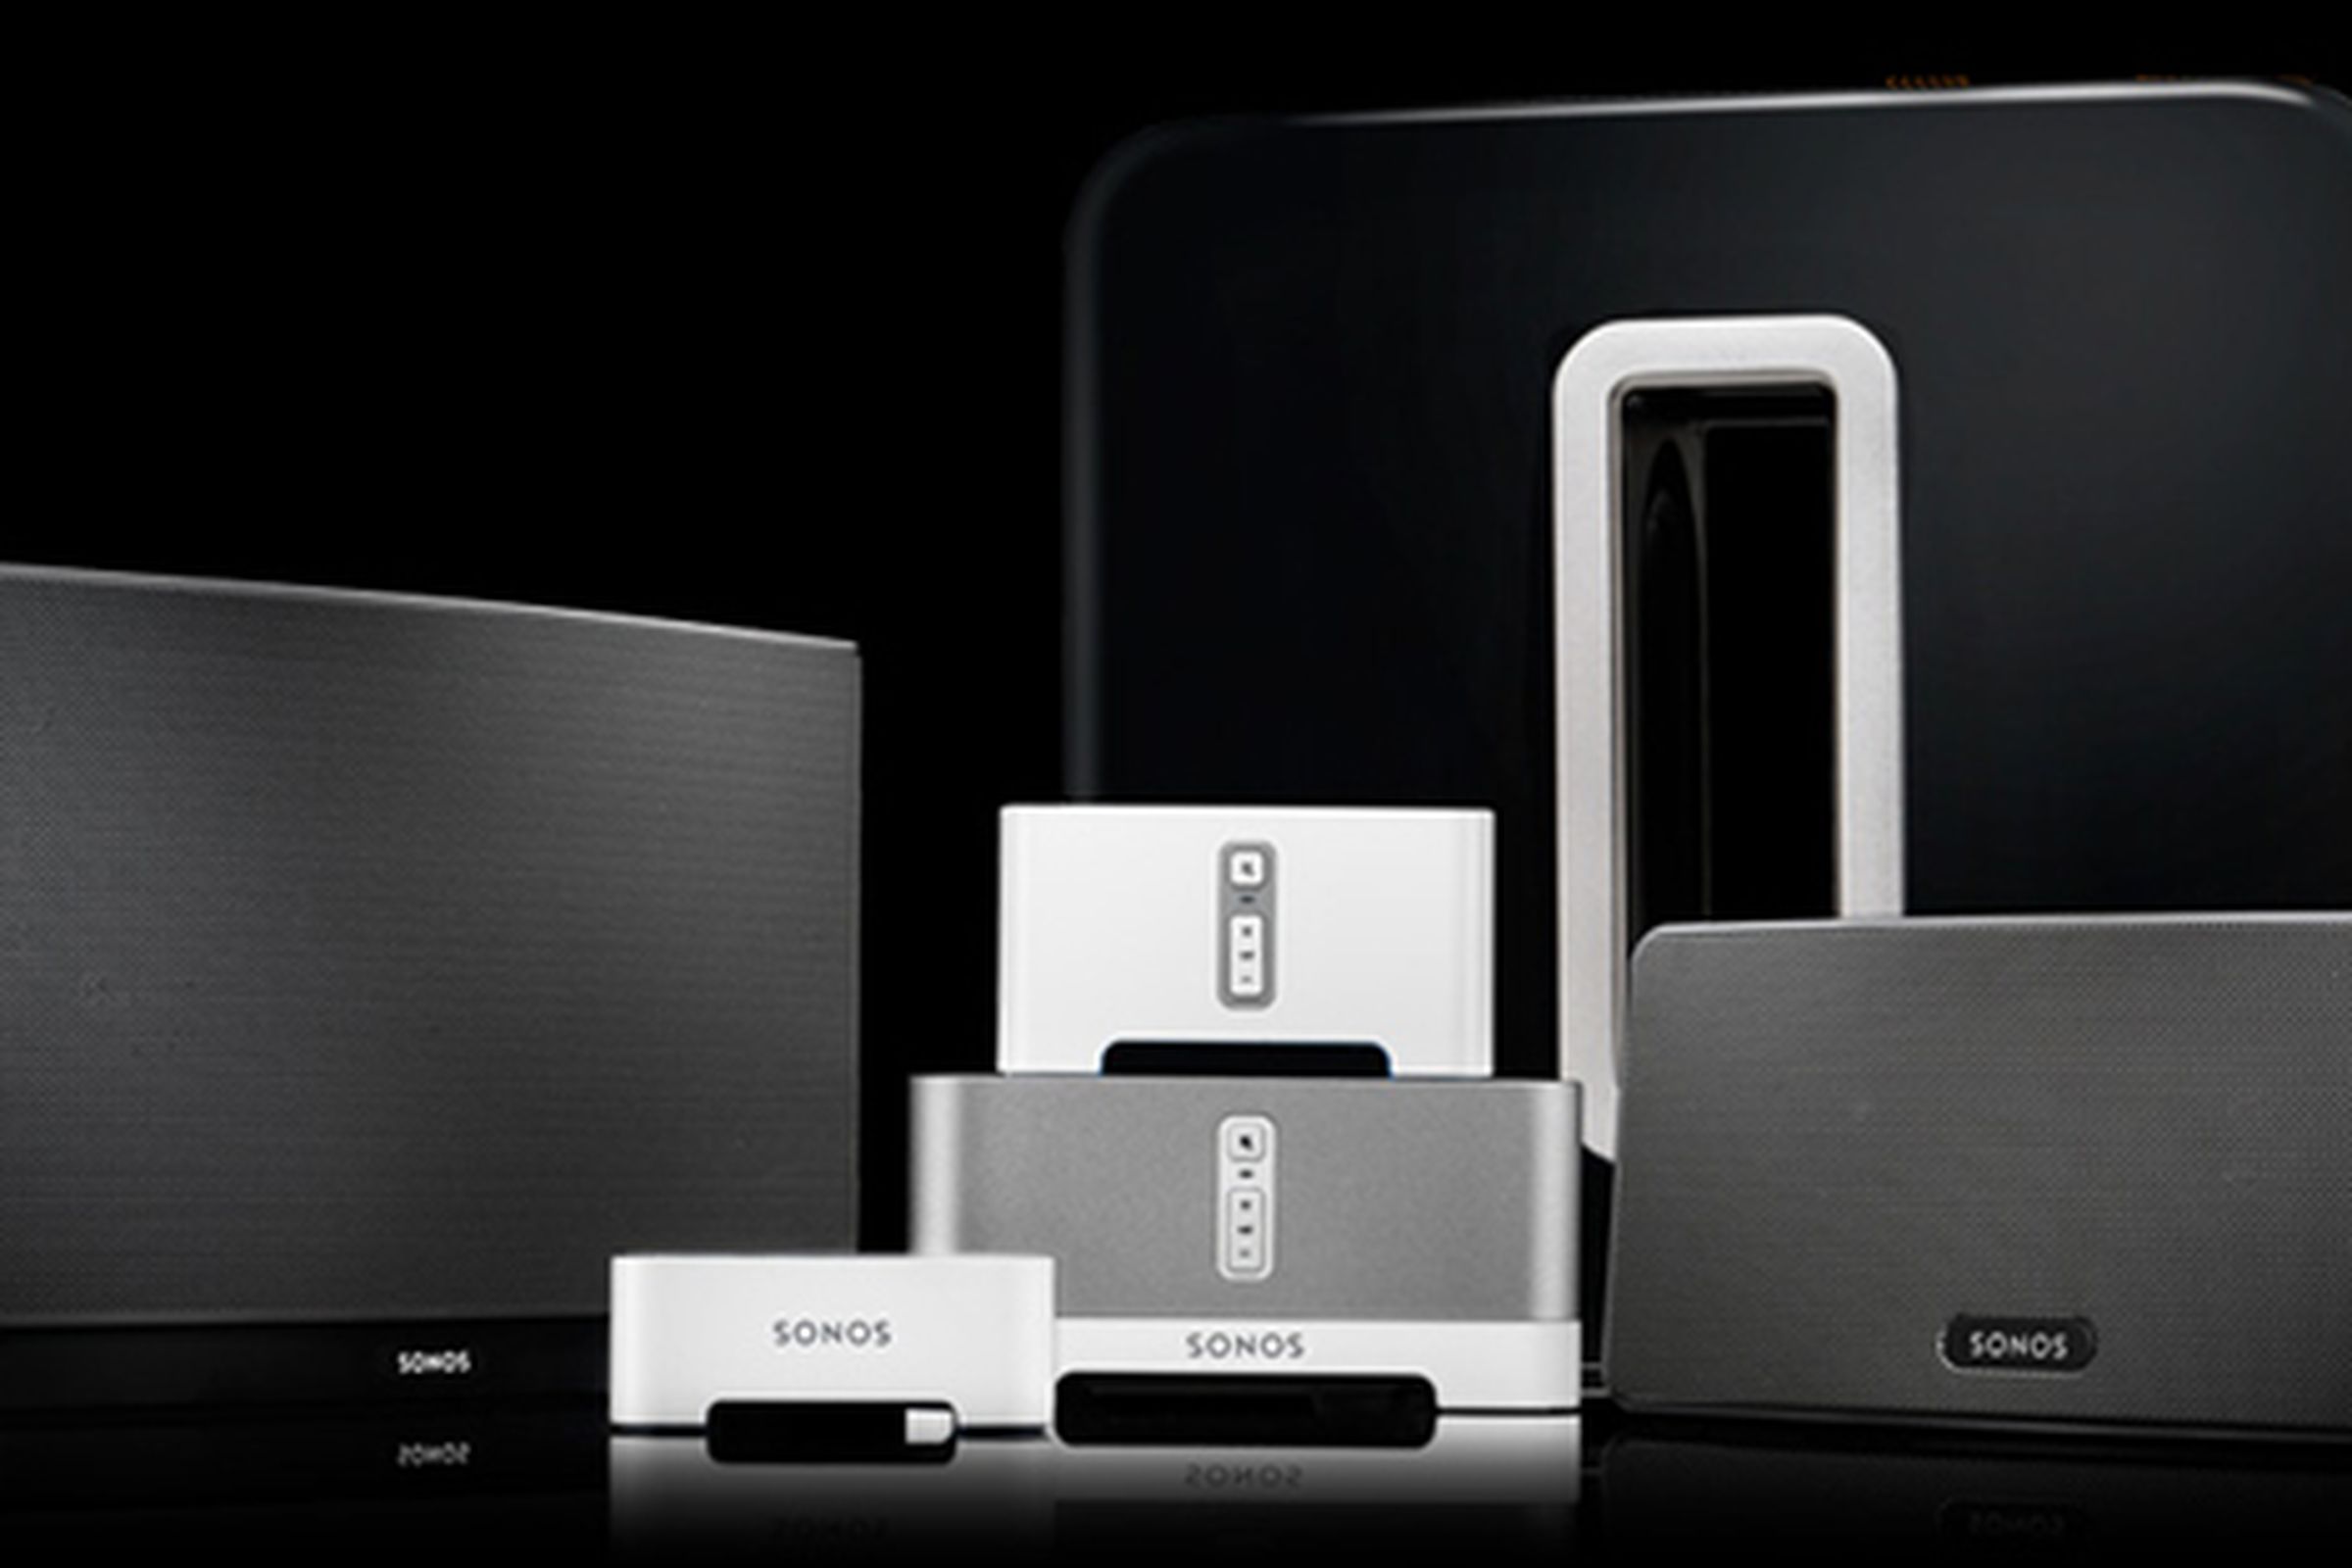 Sonos products